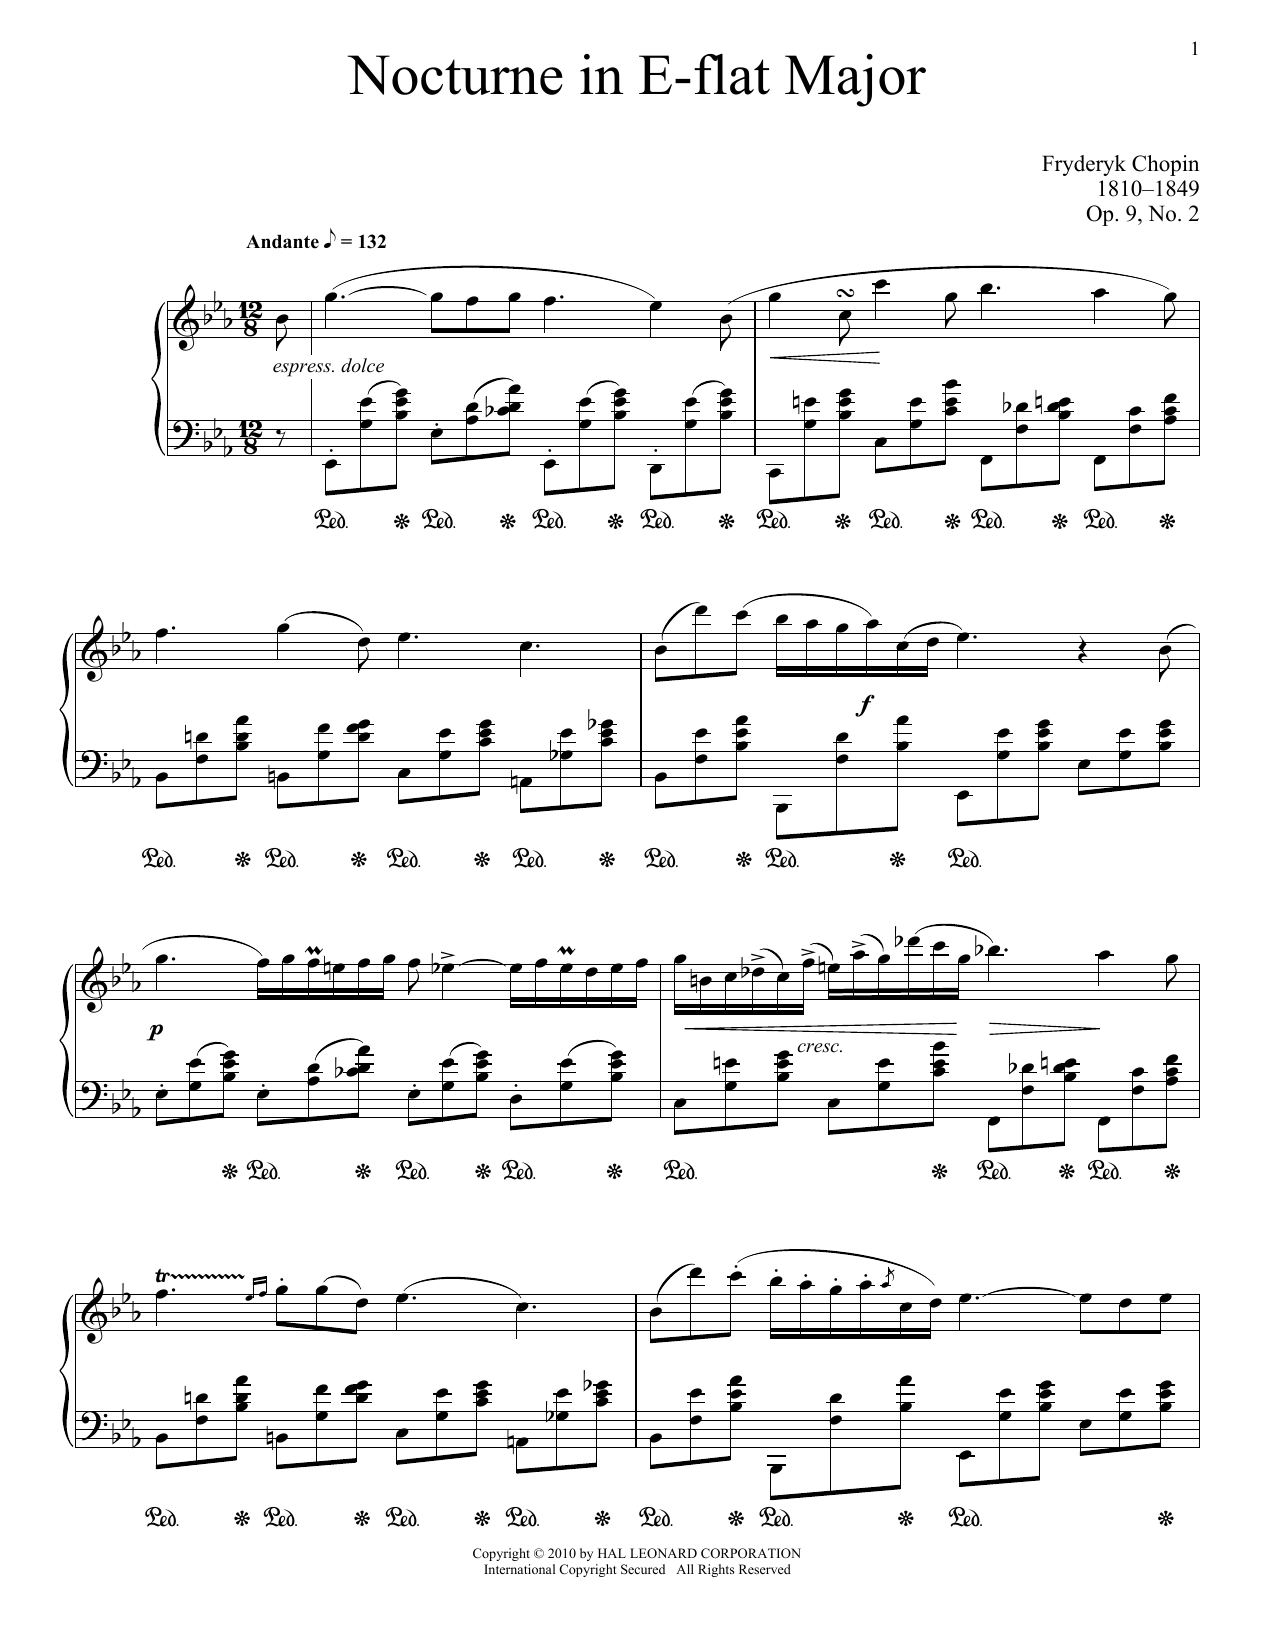 Nocturne in E-flat Major, Op. 9, No. 2 sheet music